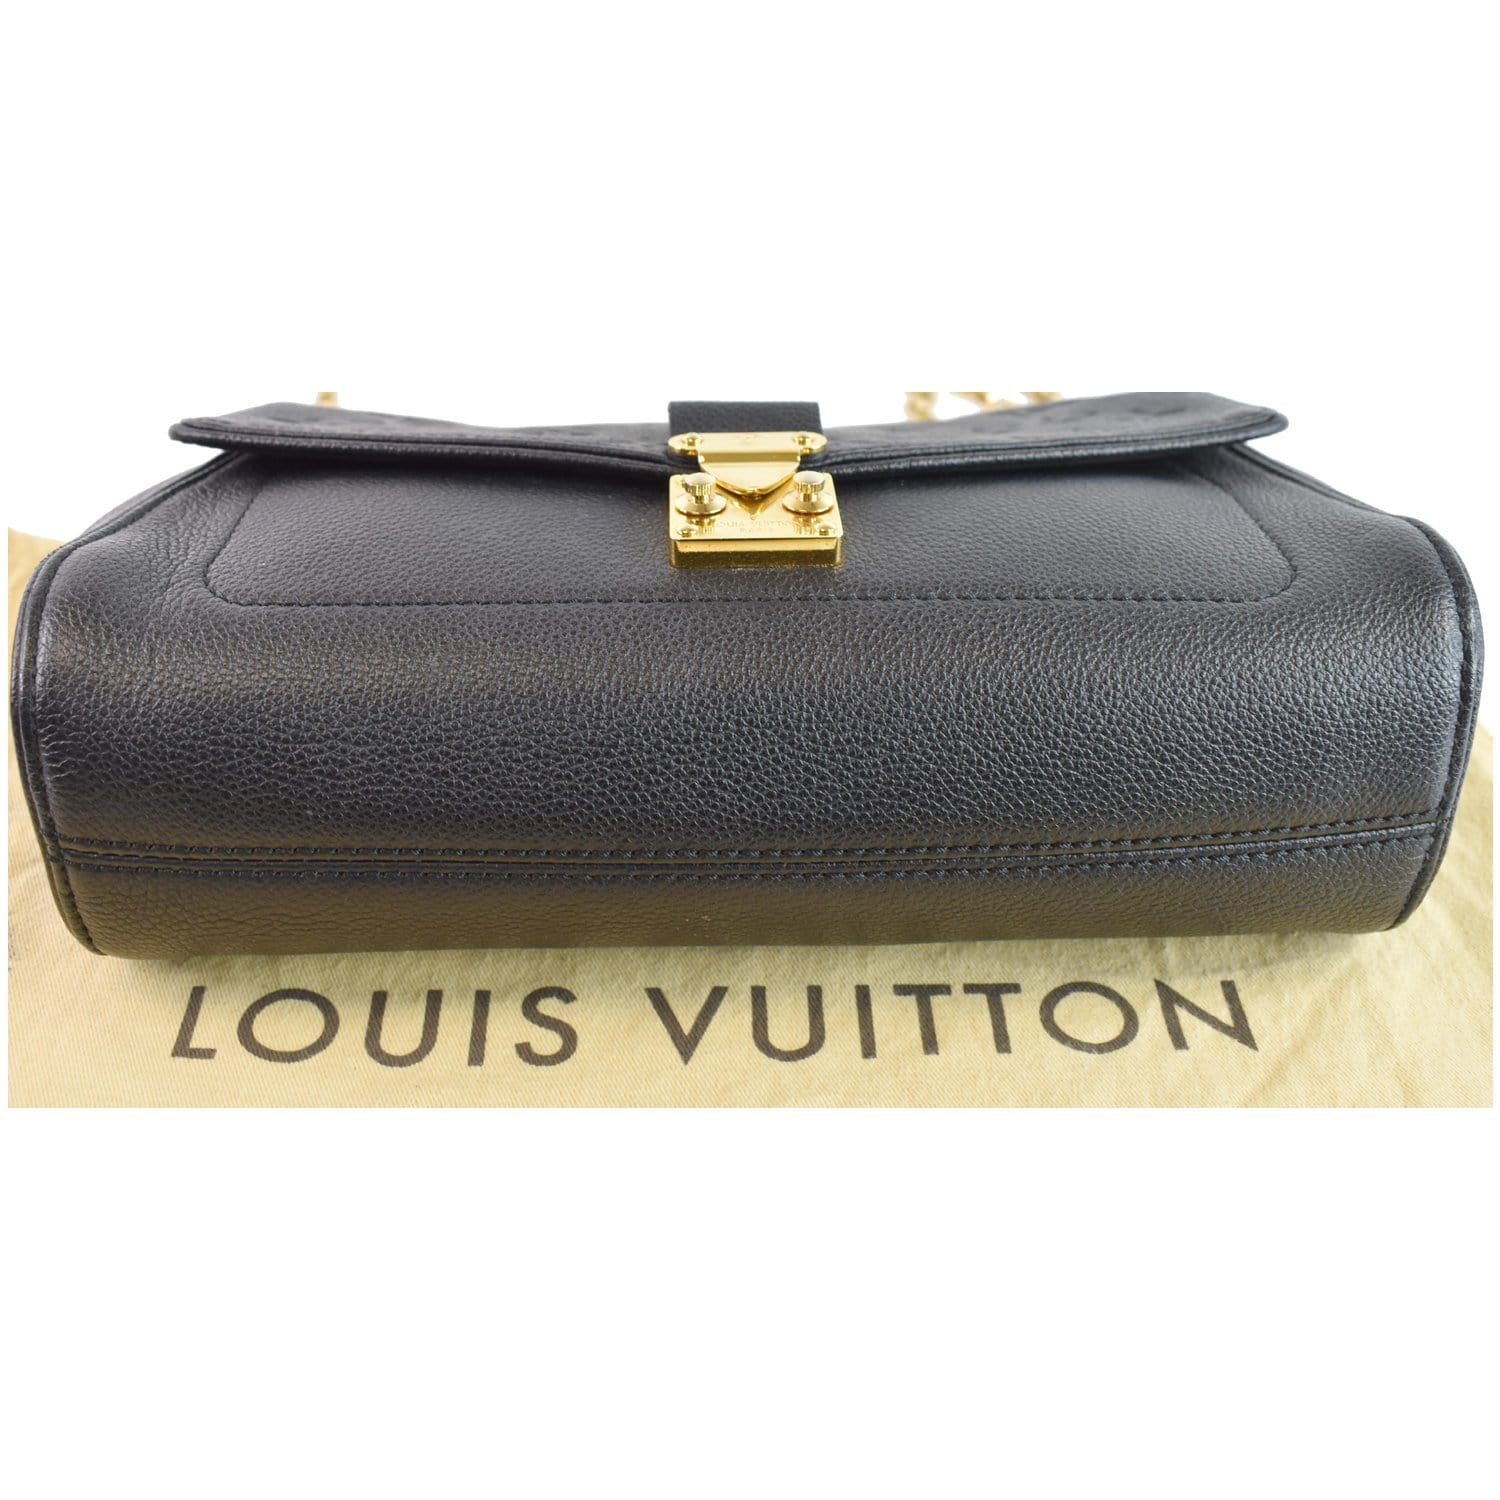 Louis Vuitton, Bags, Louis Vuitton Empreinte Saint Germain Pm Black